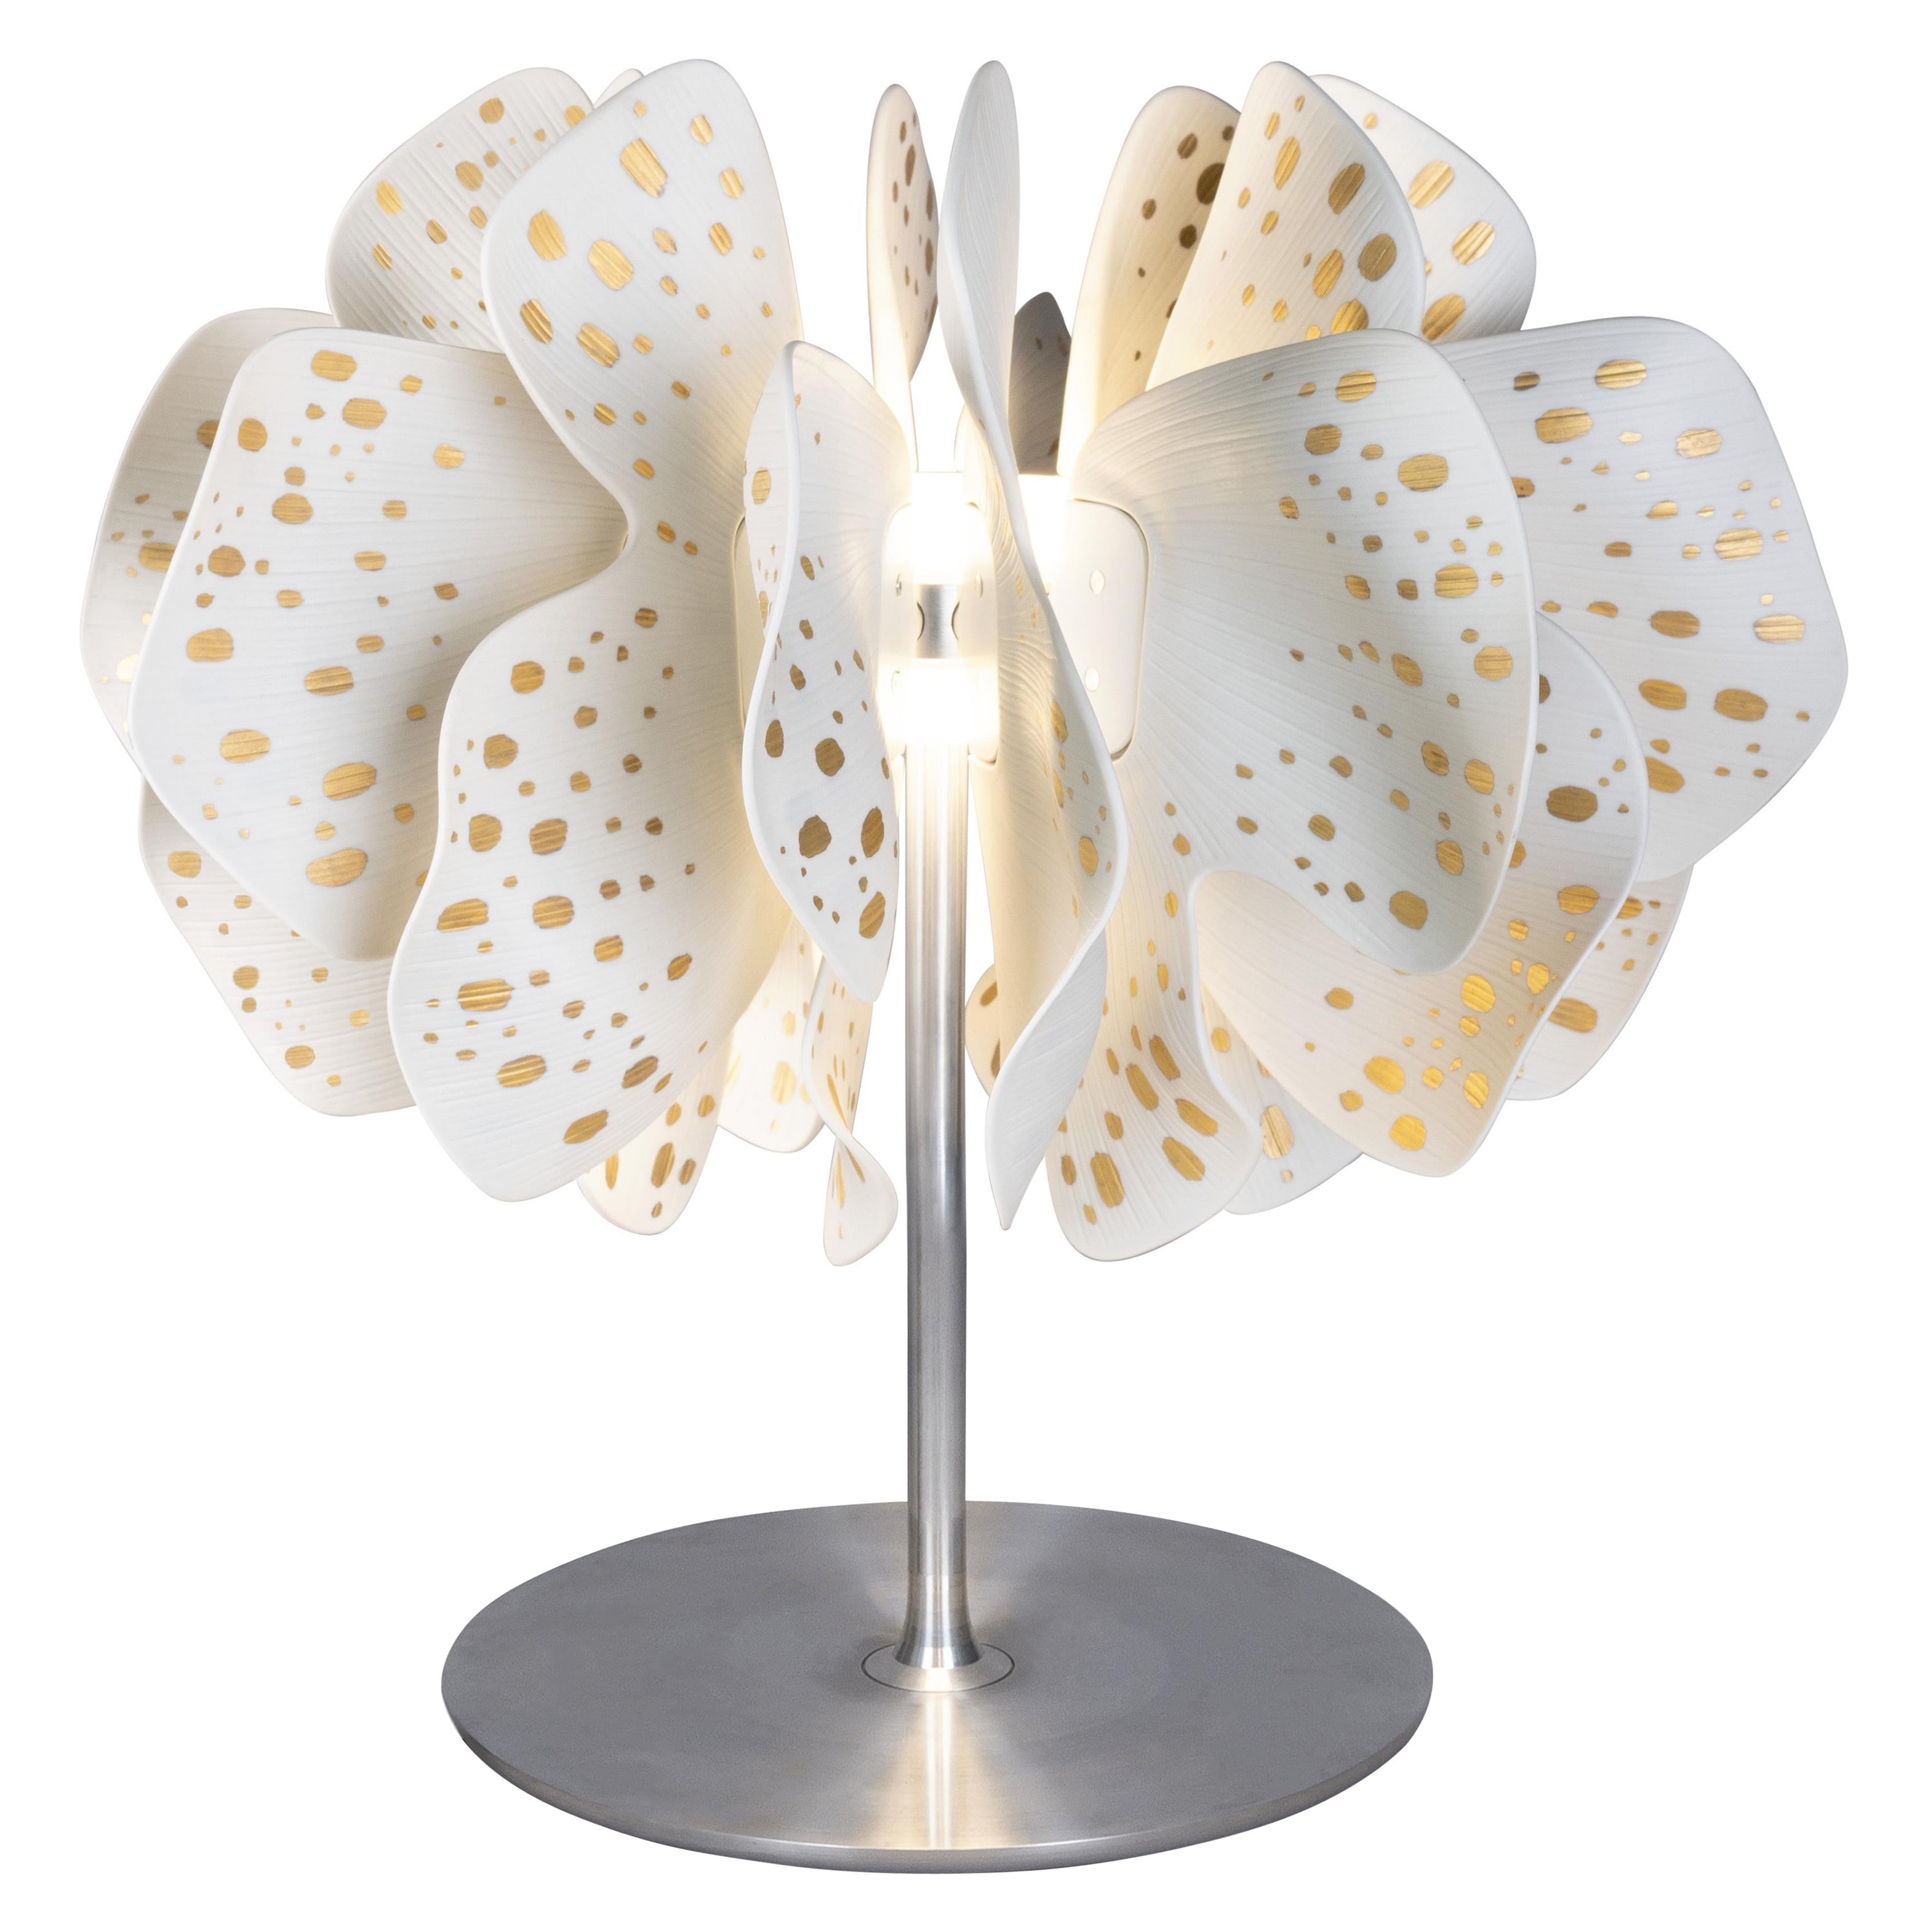 Nightbloom Table Lamp. White & gold